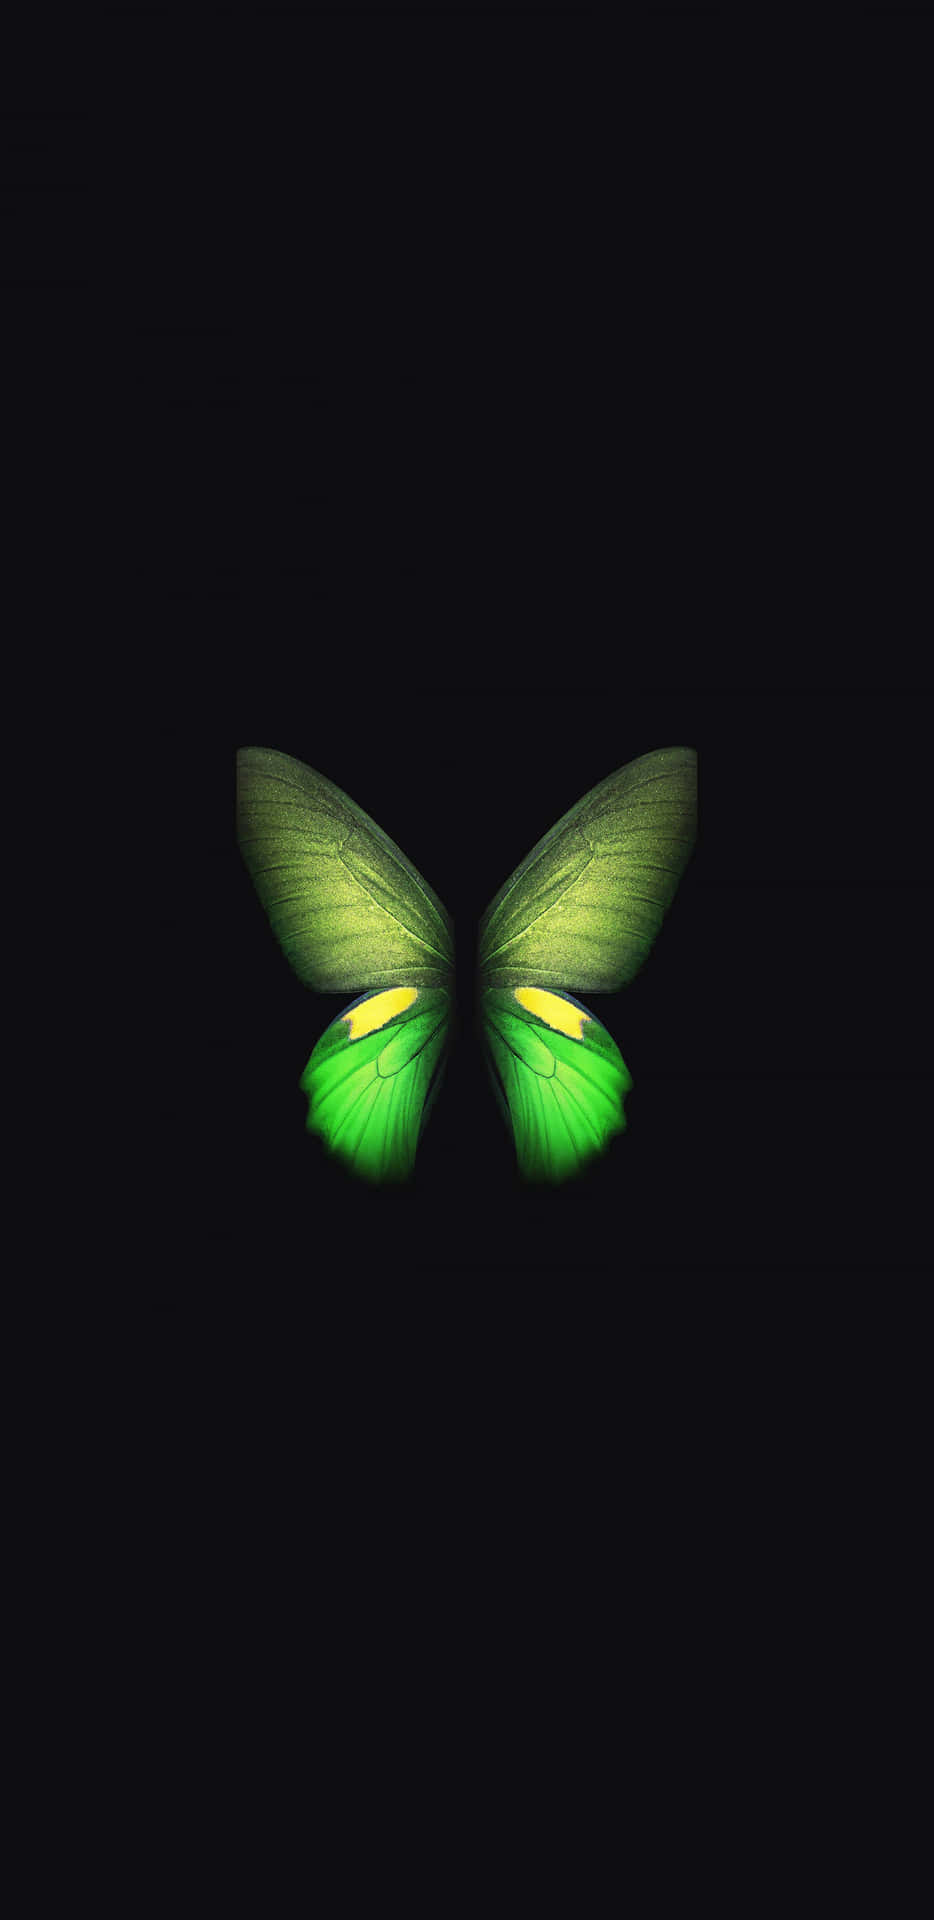 A beautiful Green Butterfly on a flower Wallpaper